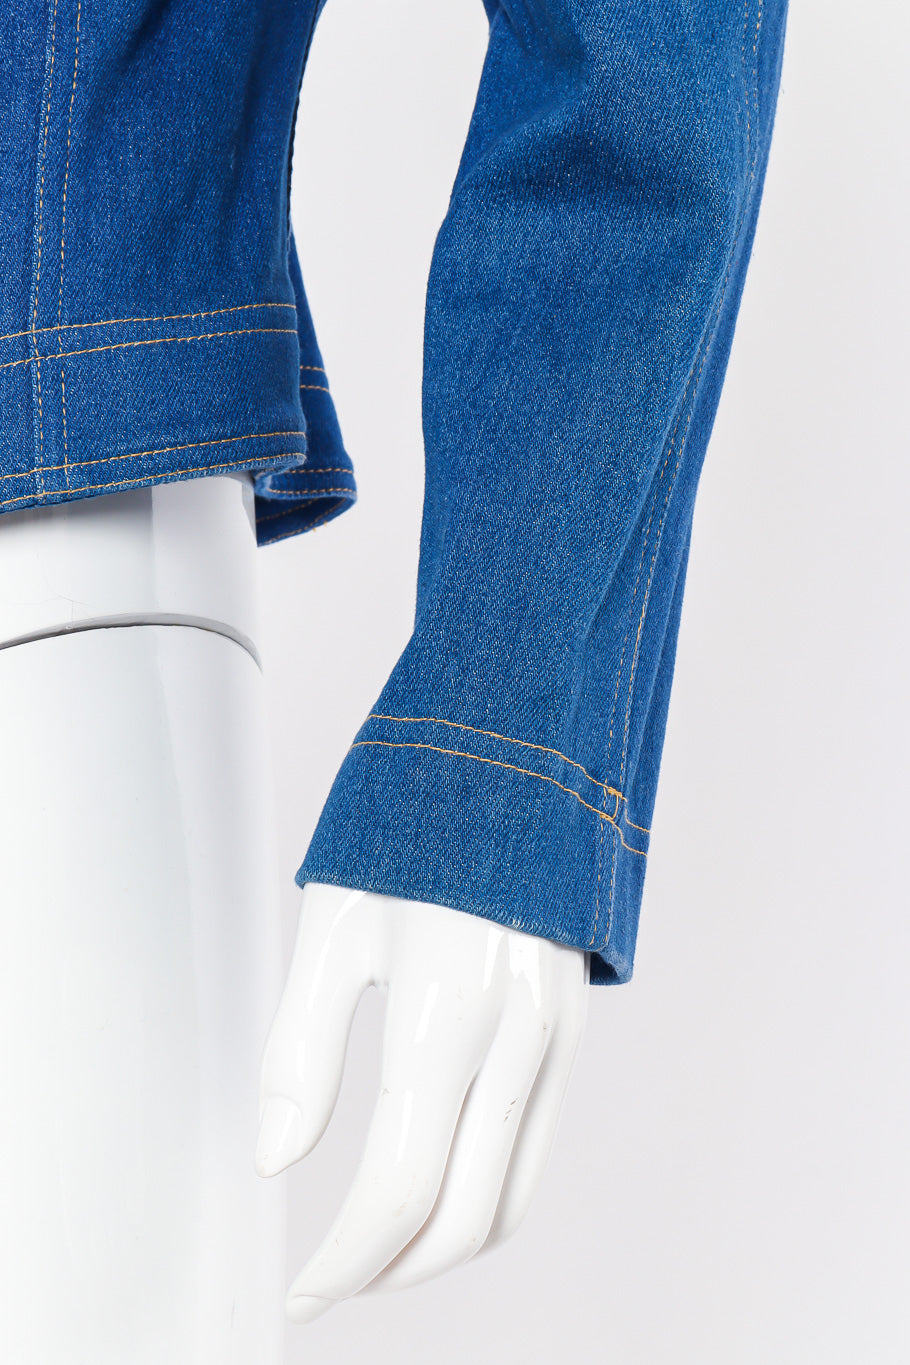 Vintage Lillie Rubin Crystal Studded Denim Jacket view of sleeve on mannequin closeup @Recessla